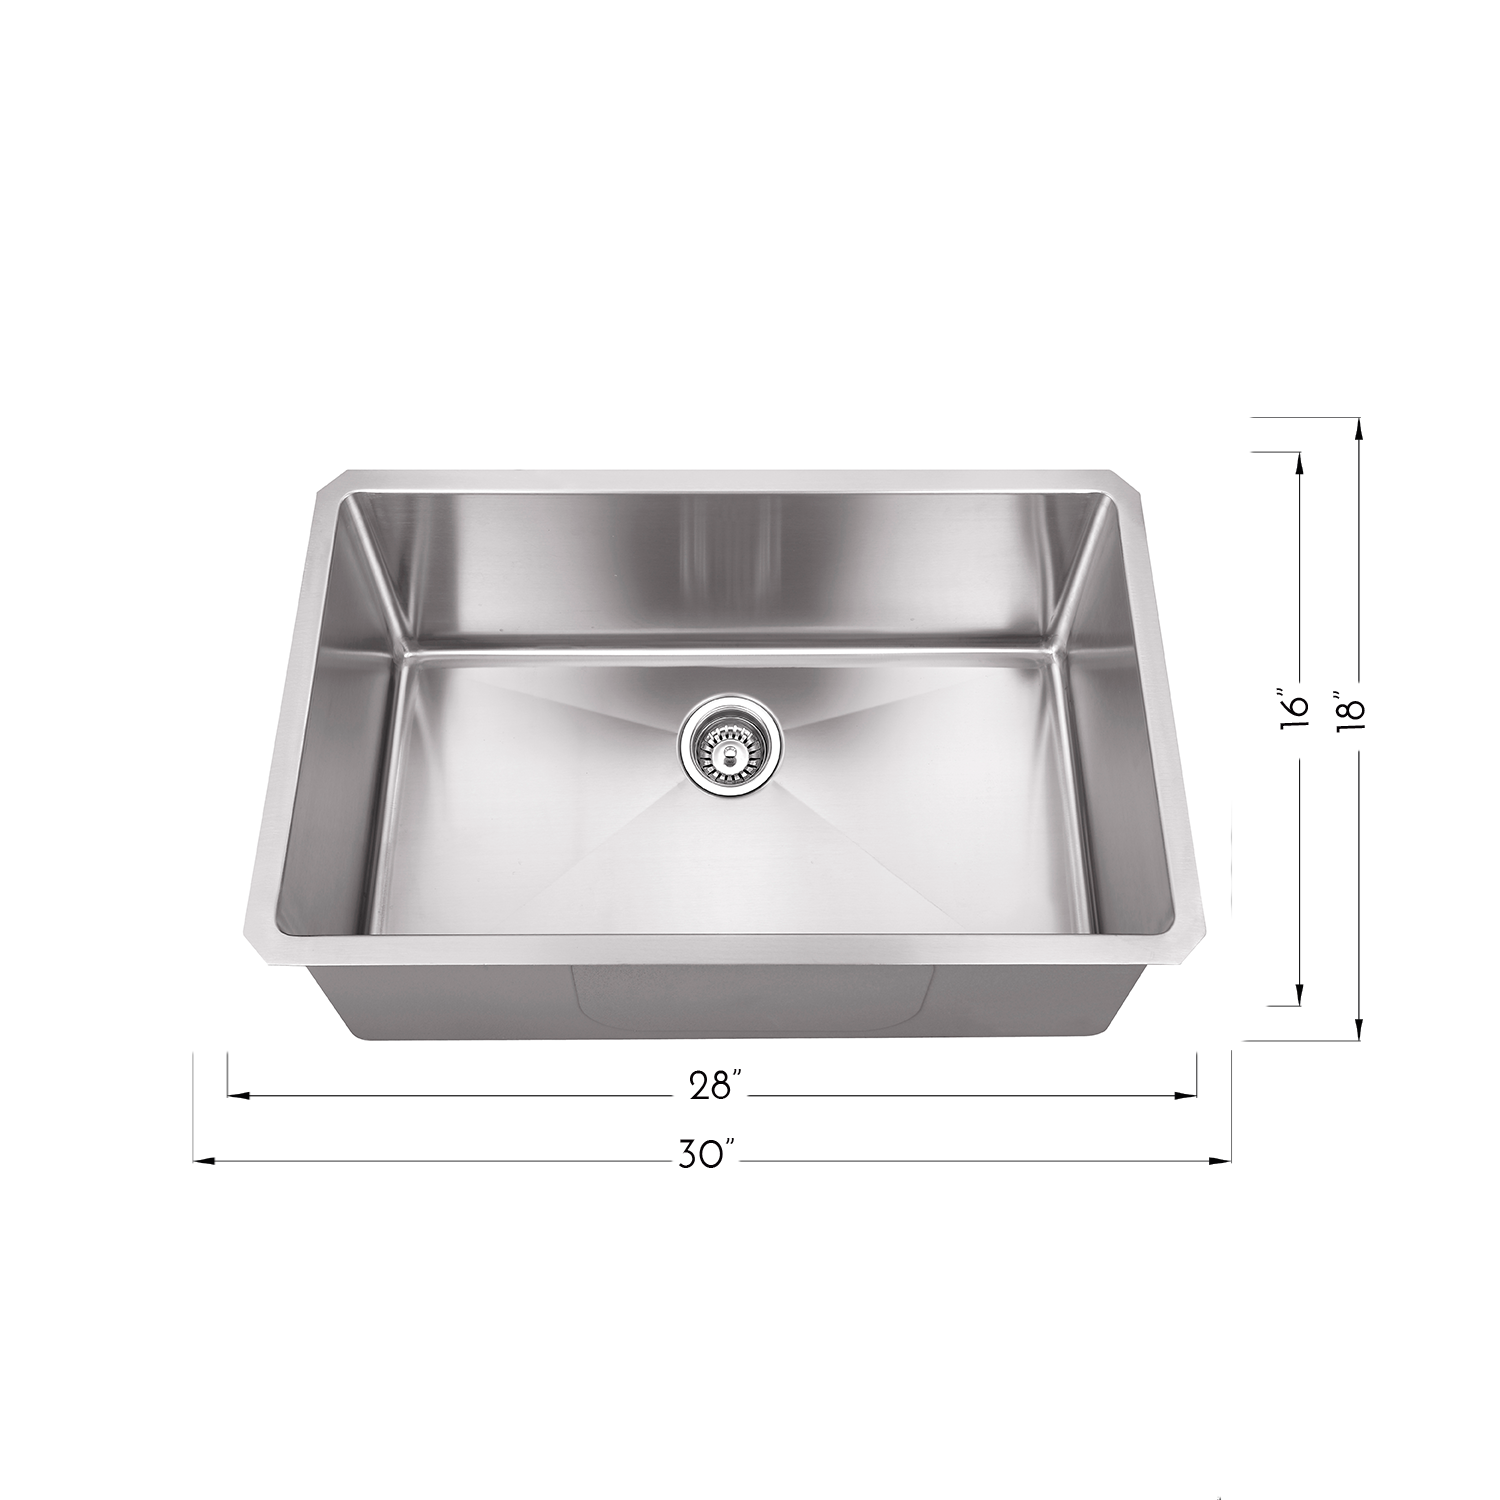 DAX Single Bowl Undermount Kitchen Sink 30" x 18" - R10 - 18G.  No Accessories Included (DX-T3018-R10-X)